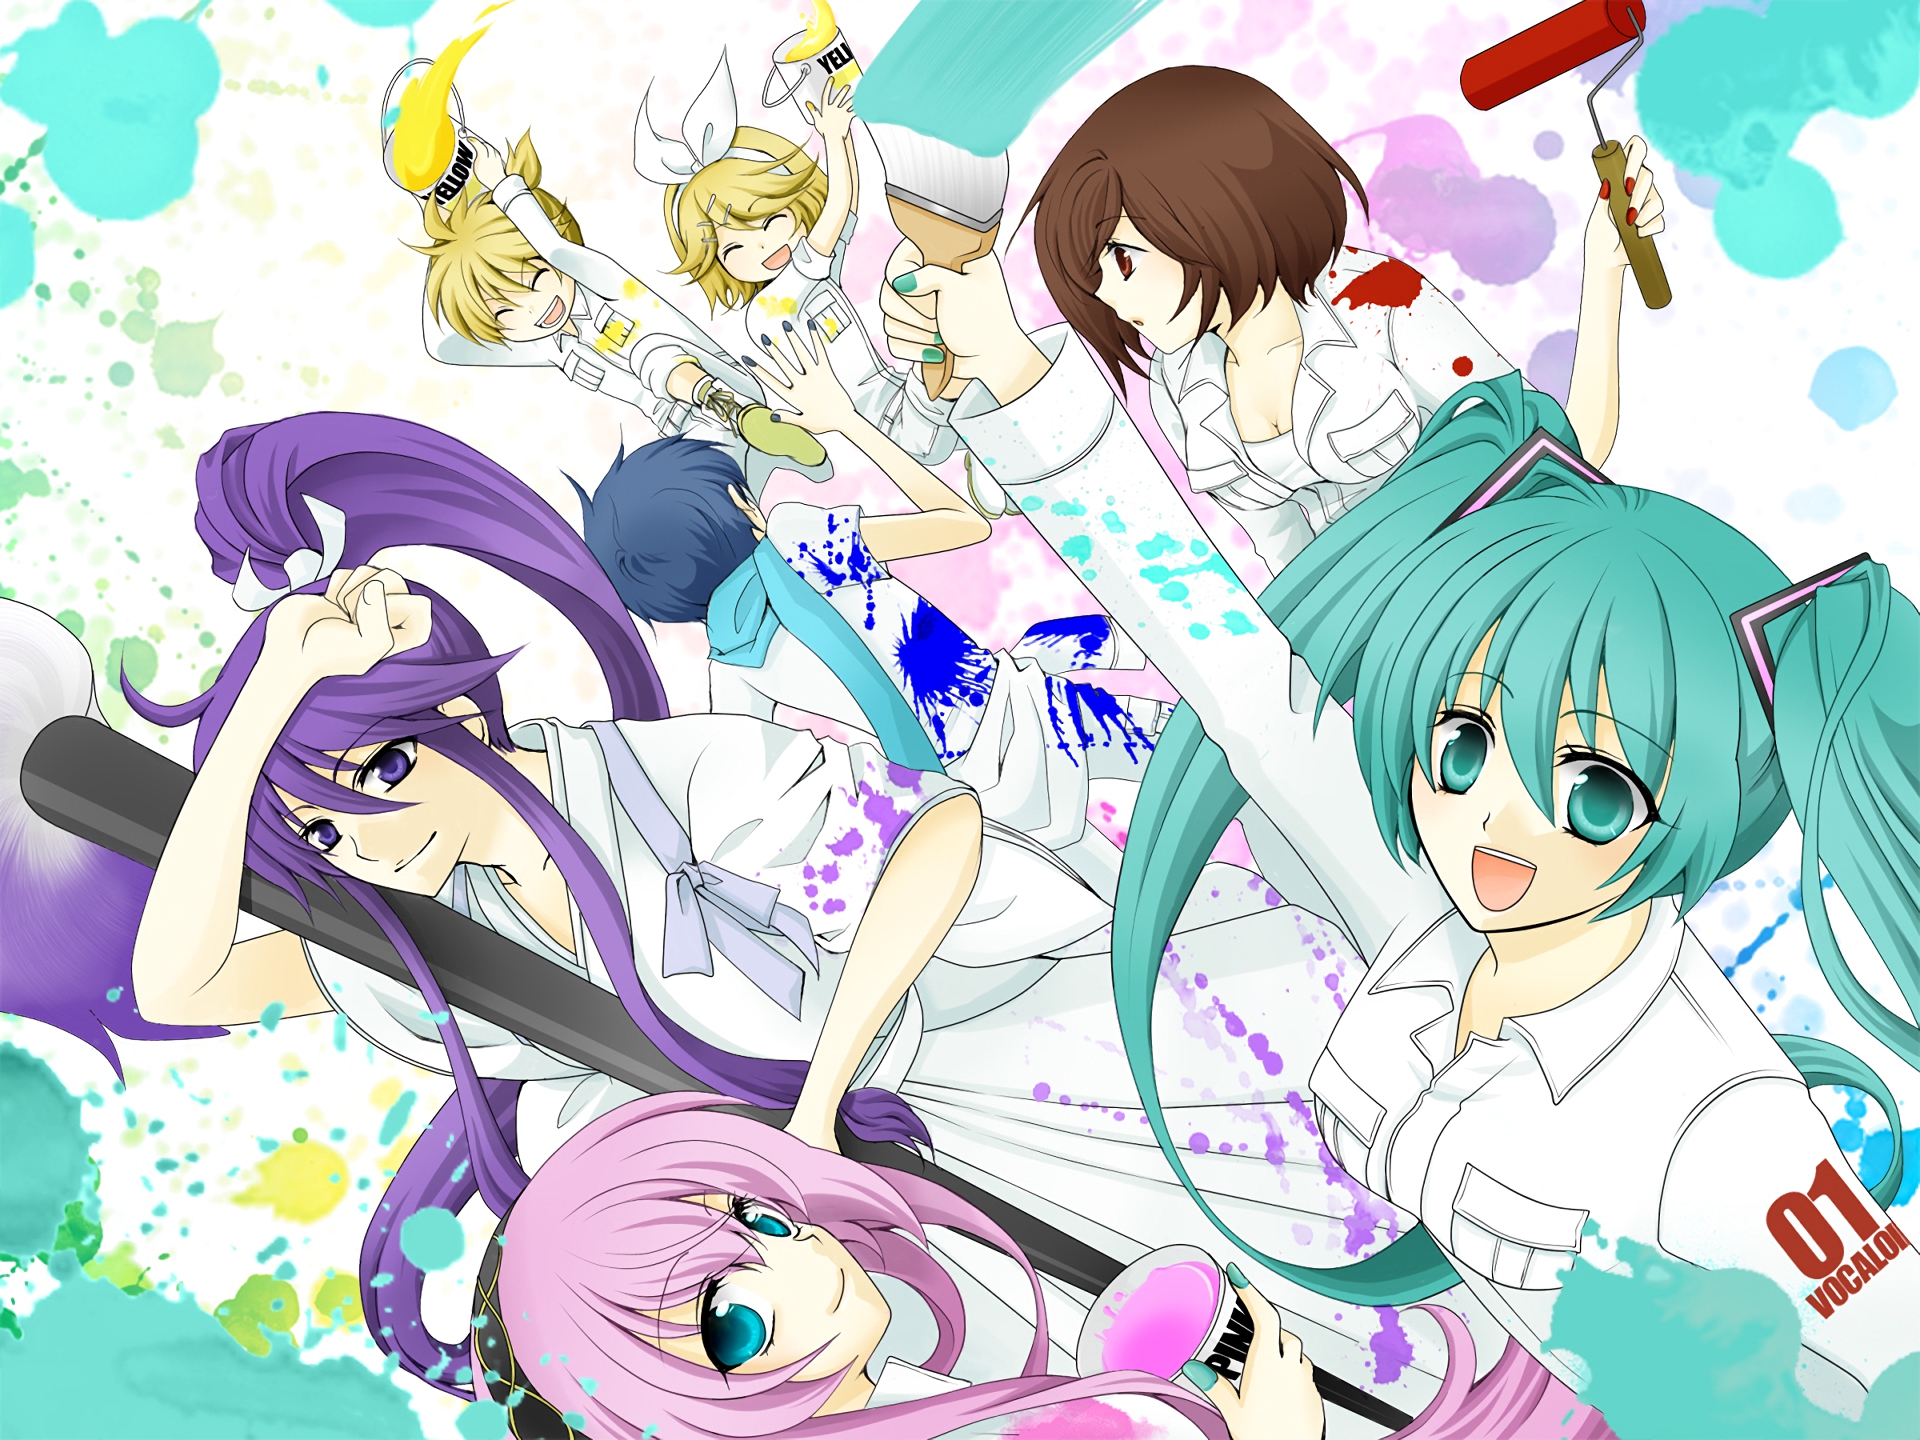 Descarga gratis la imagen Vocaloid, Luka Megurine, Animado, Hatsune Miku, Rin Kagamine, Kaito (Vocaloid), Len Kagamine, Meiko (Vocaloid), Kamui Gakupo en el escritorio de tu PC